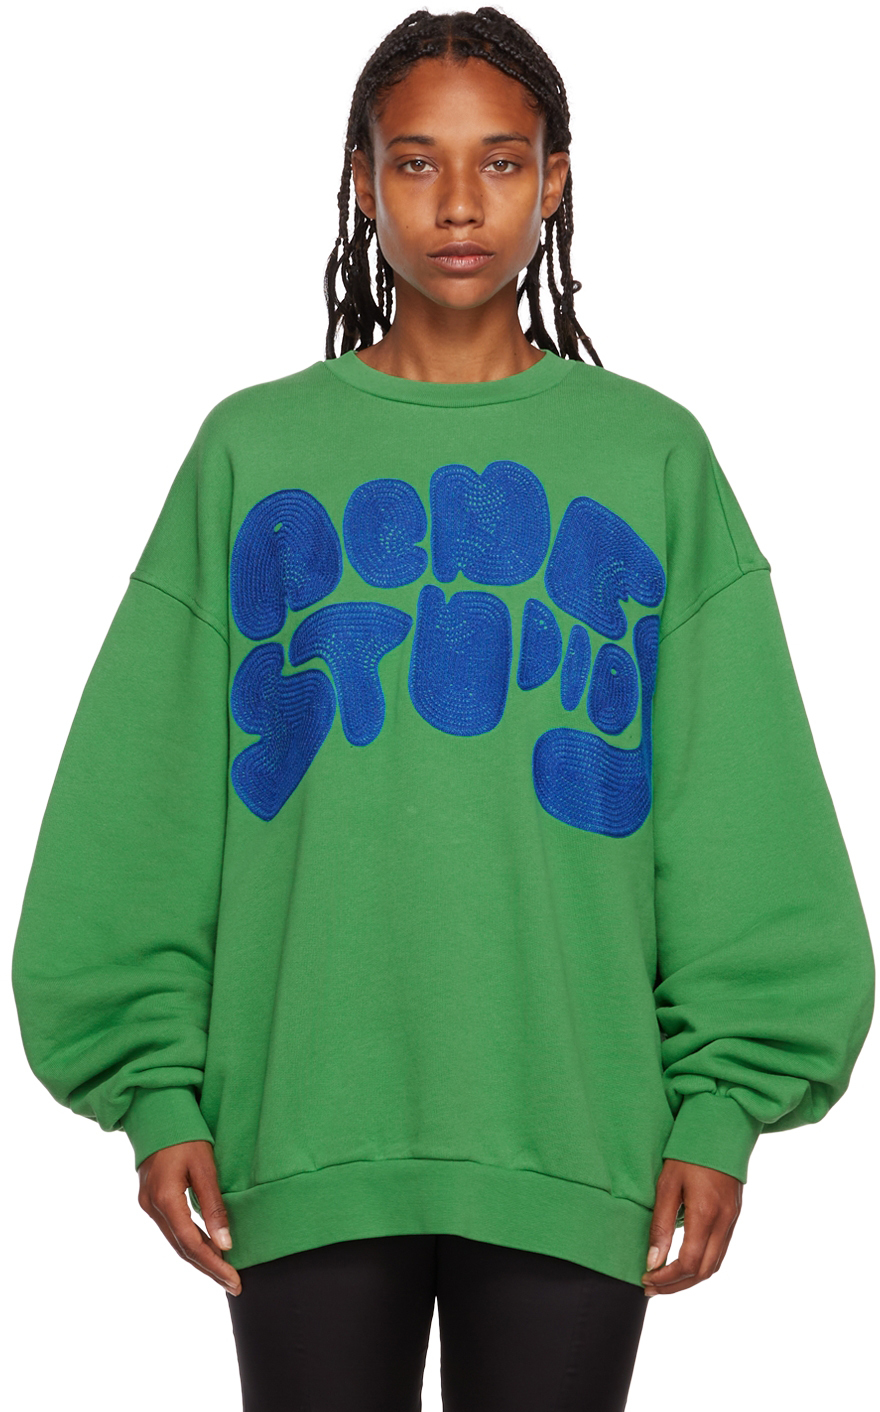 Green Sweatshirt by Acne Studios on Sale